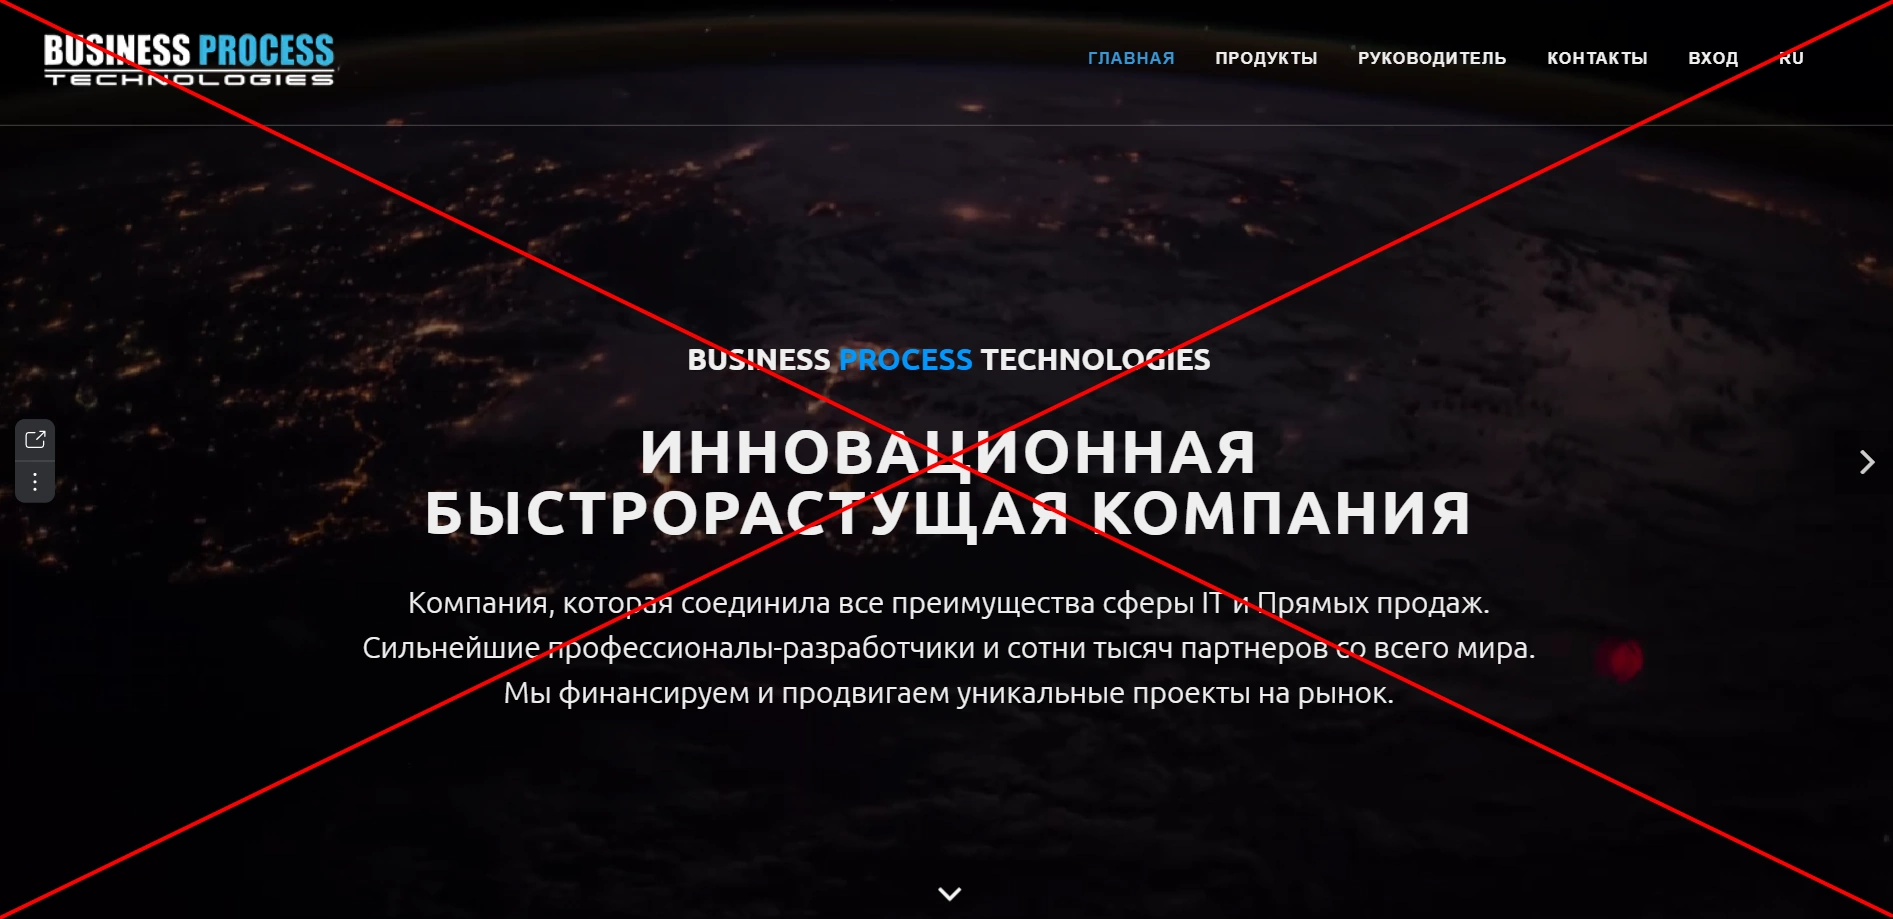 Business Process Technologies отзывы 2022 - маркетинг план